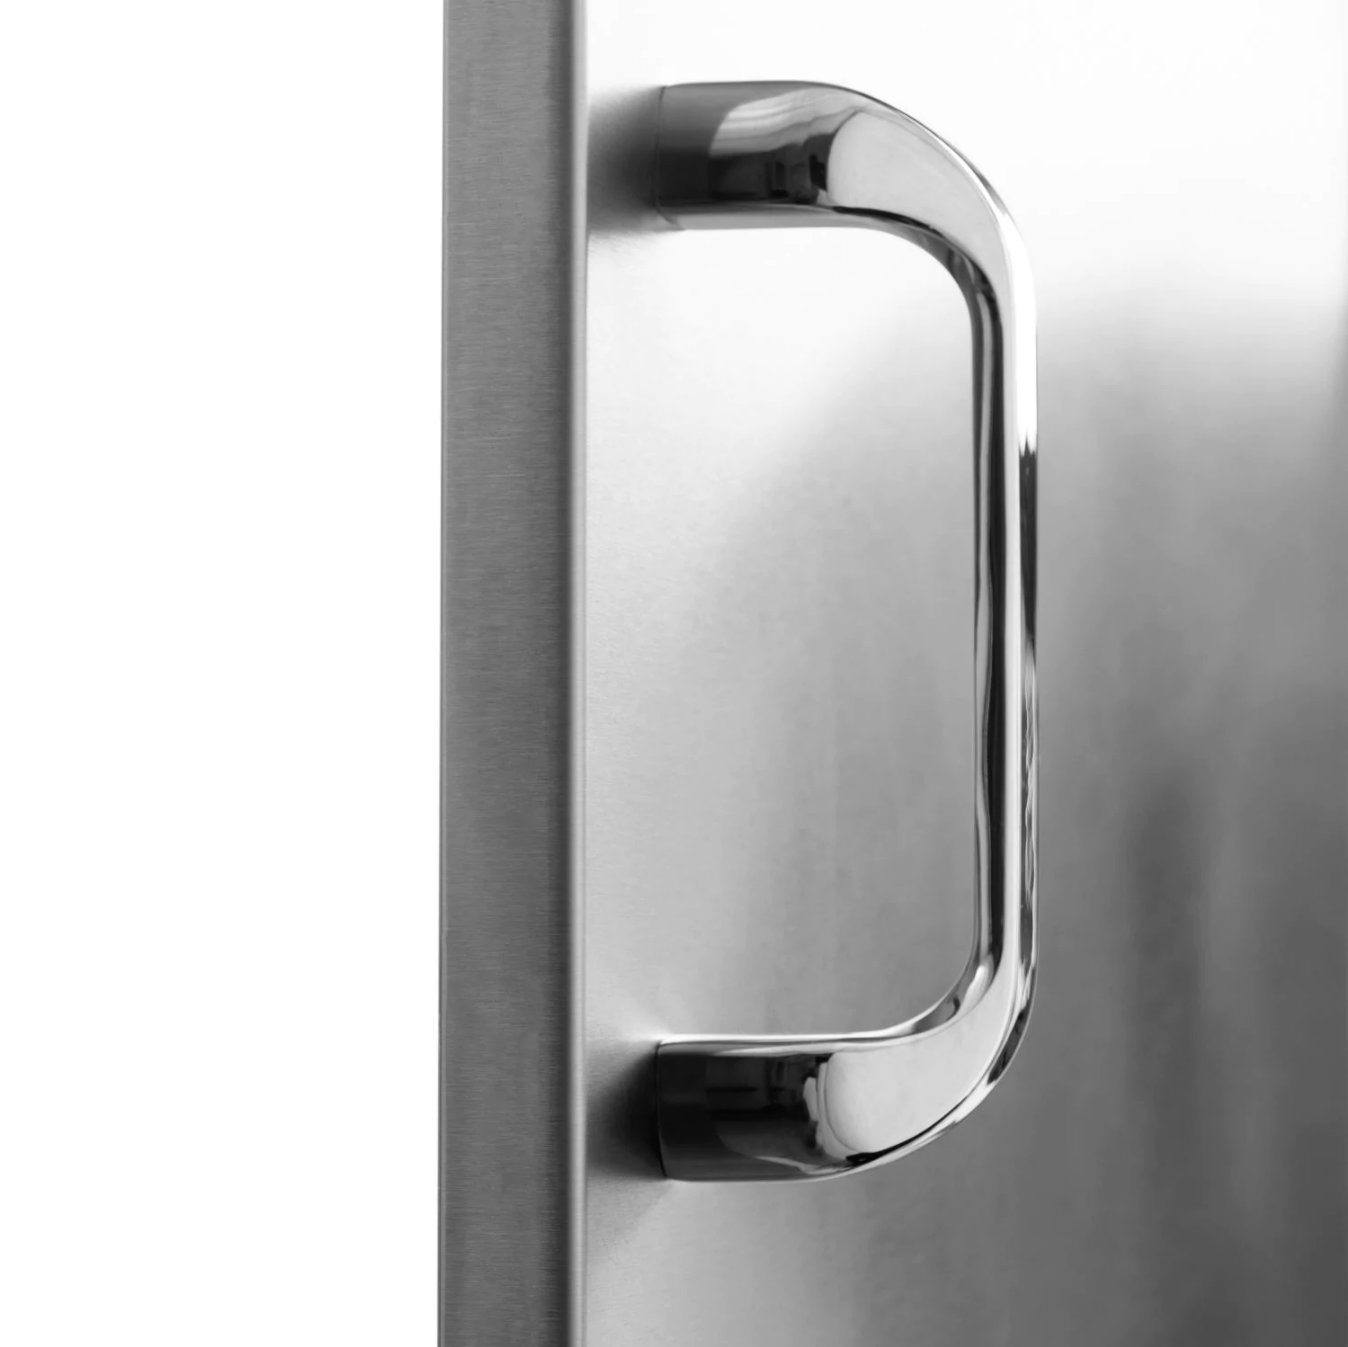 PCM 260 Series 40" Stainless Steel Double Access Door